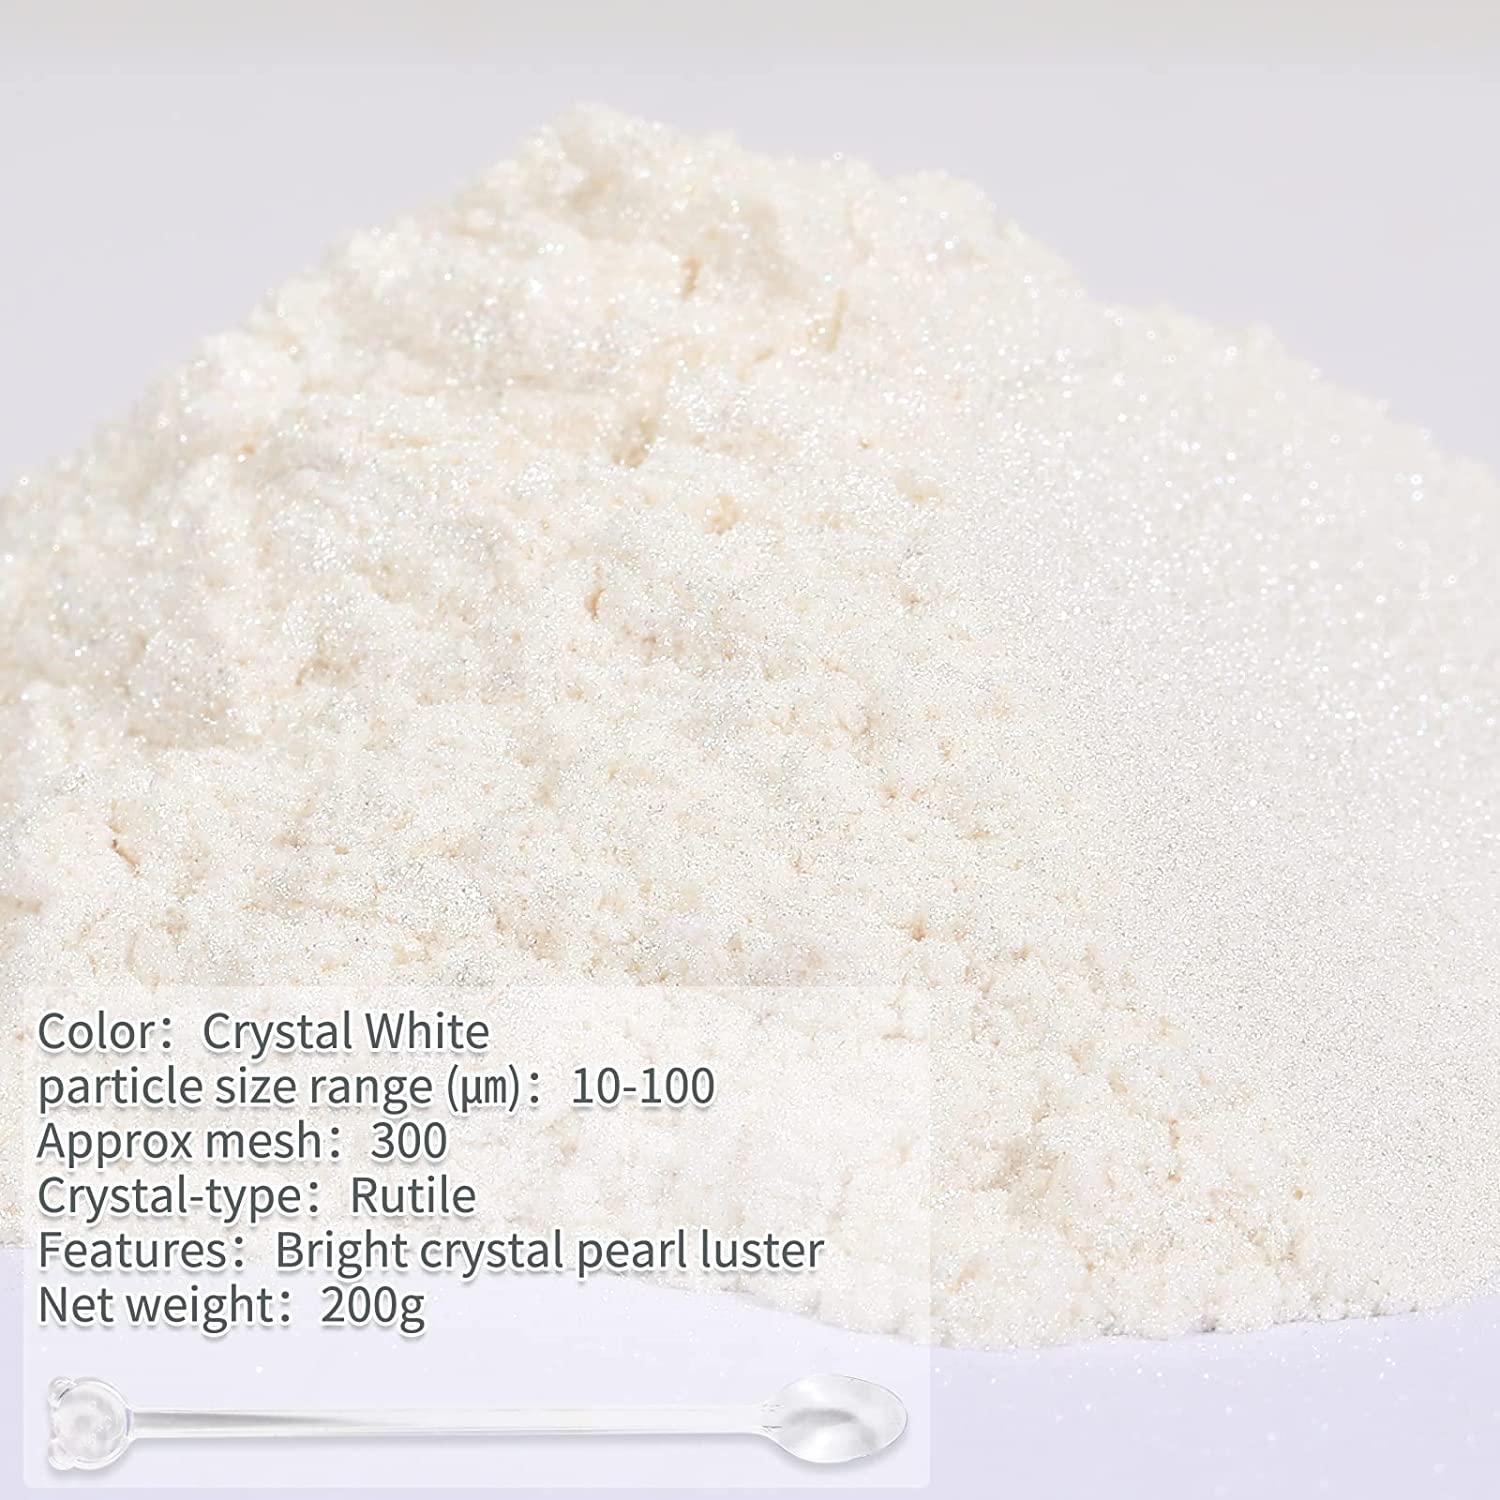 Mica Powder,200g/7.05oz Large Jar,Crystal White Mica Powder Pigment for  Epoxy Resin,Lip Gloss,Paint,Dye,Soap Making,Nail Polish,Candle Making,Bath  Bombs(Crystal White)